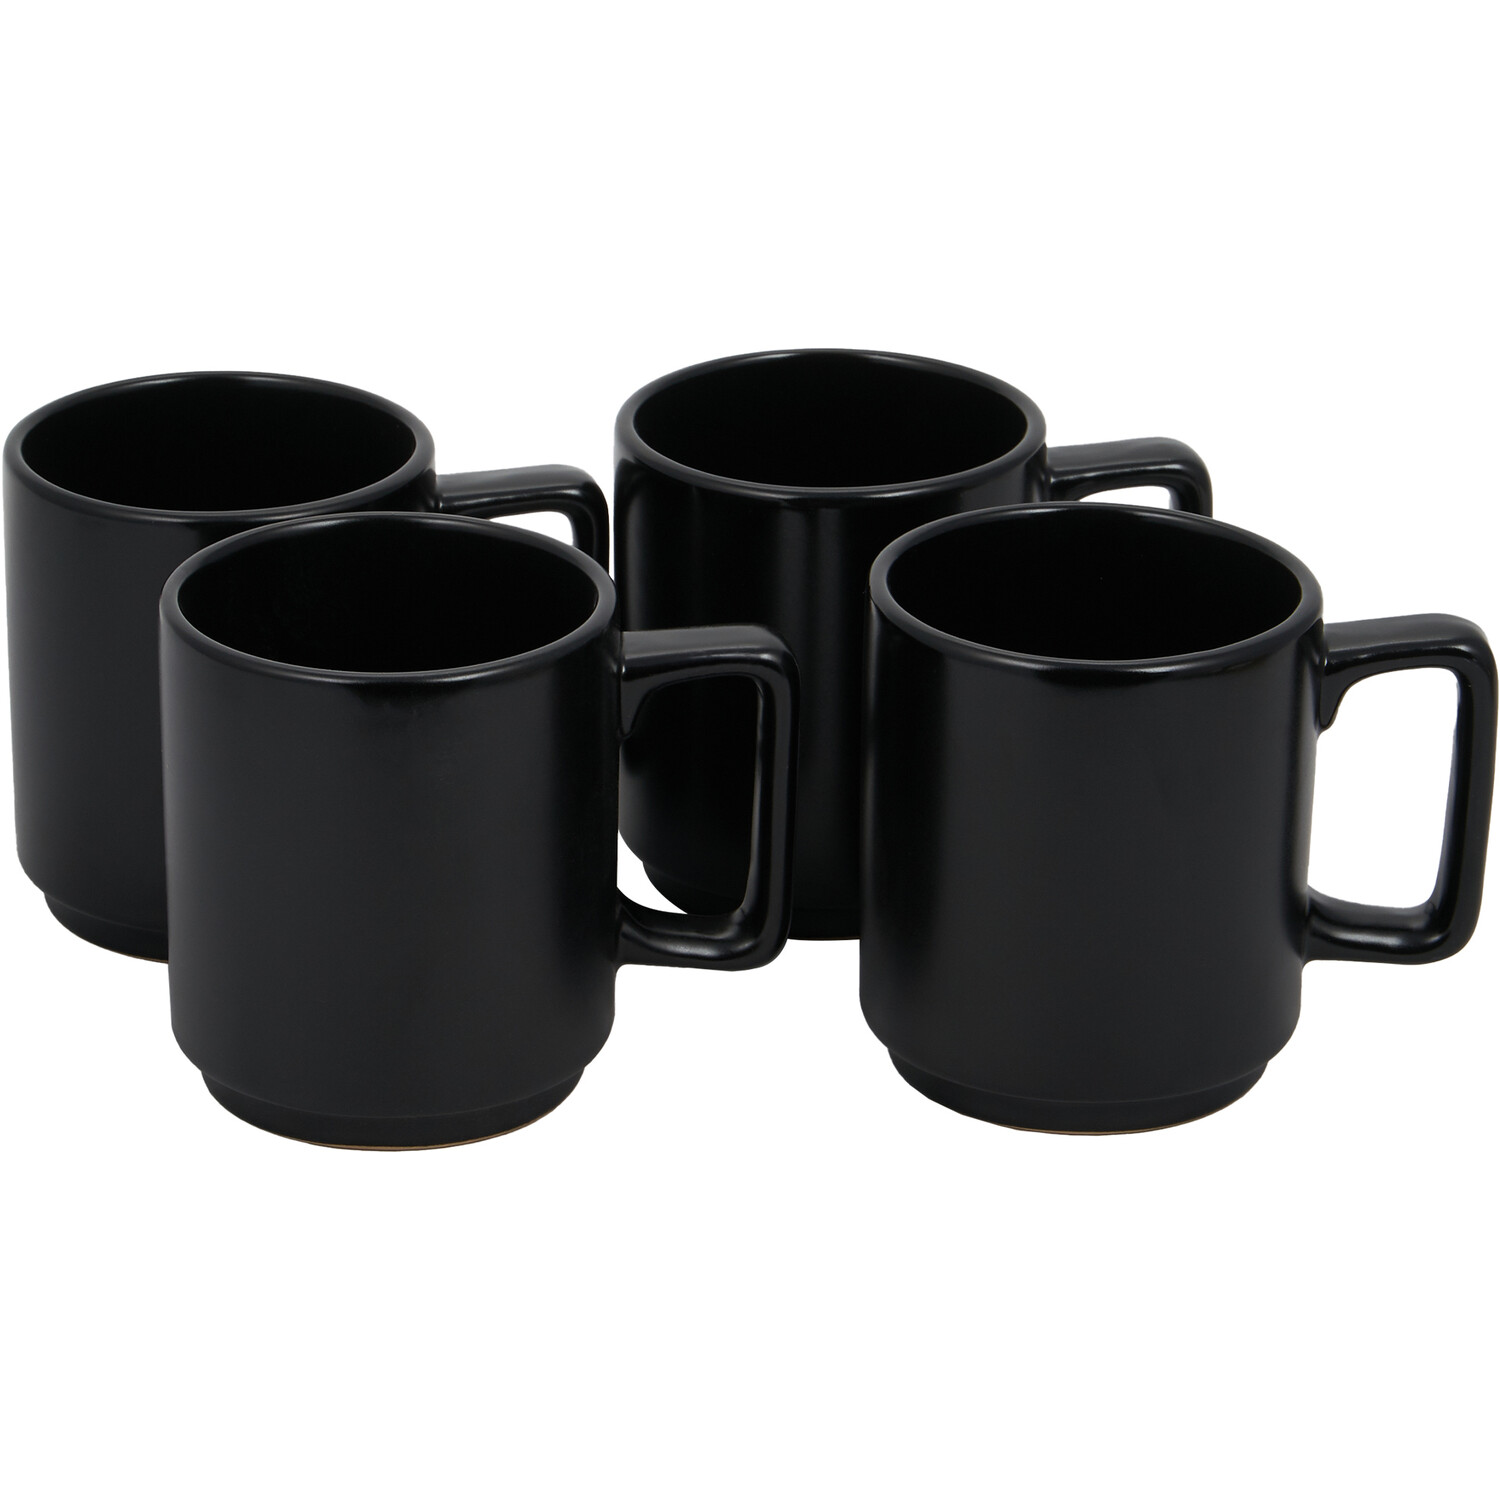 Set of 4 Malmo Stacking Mugs - Black Image 1